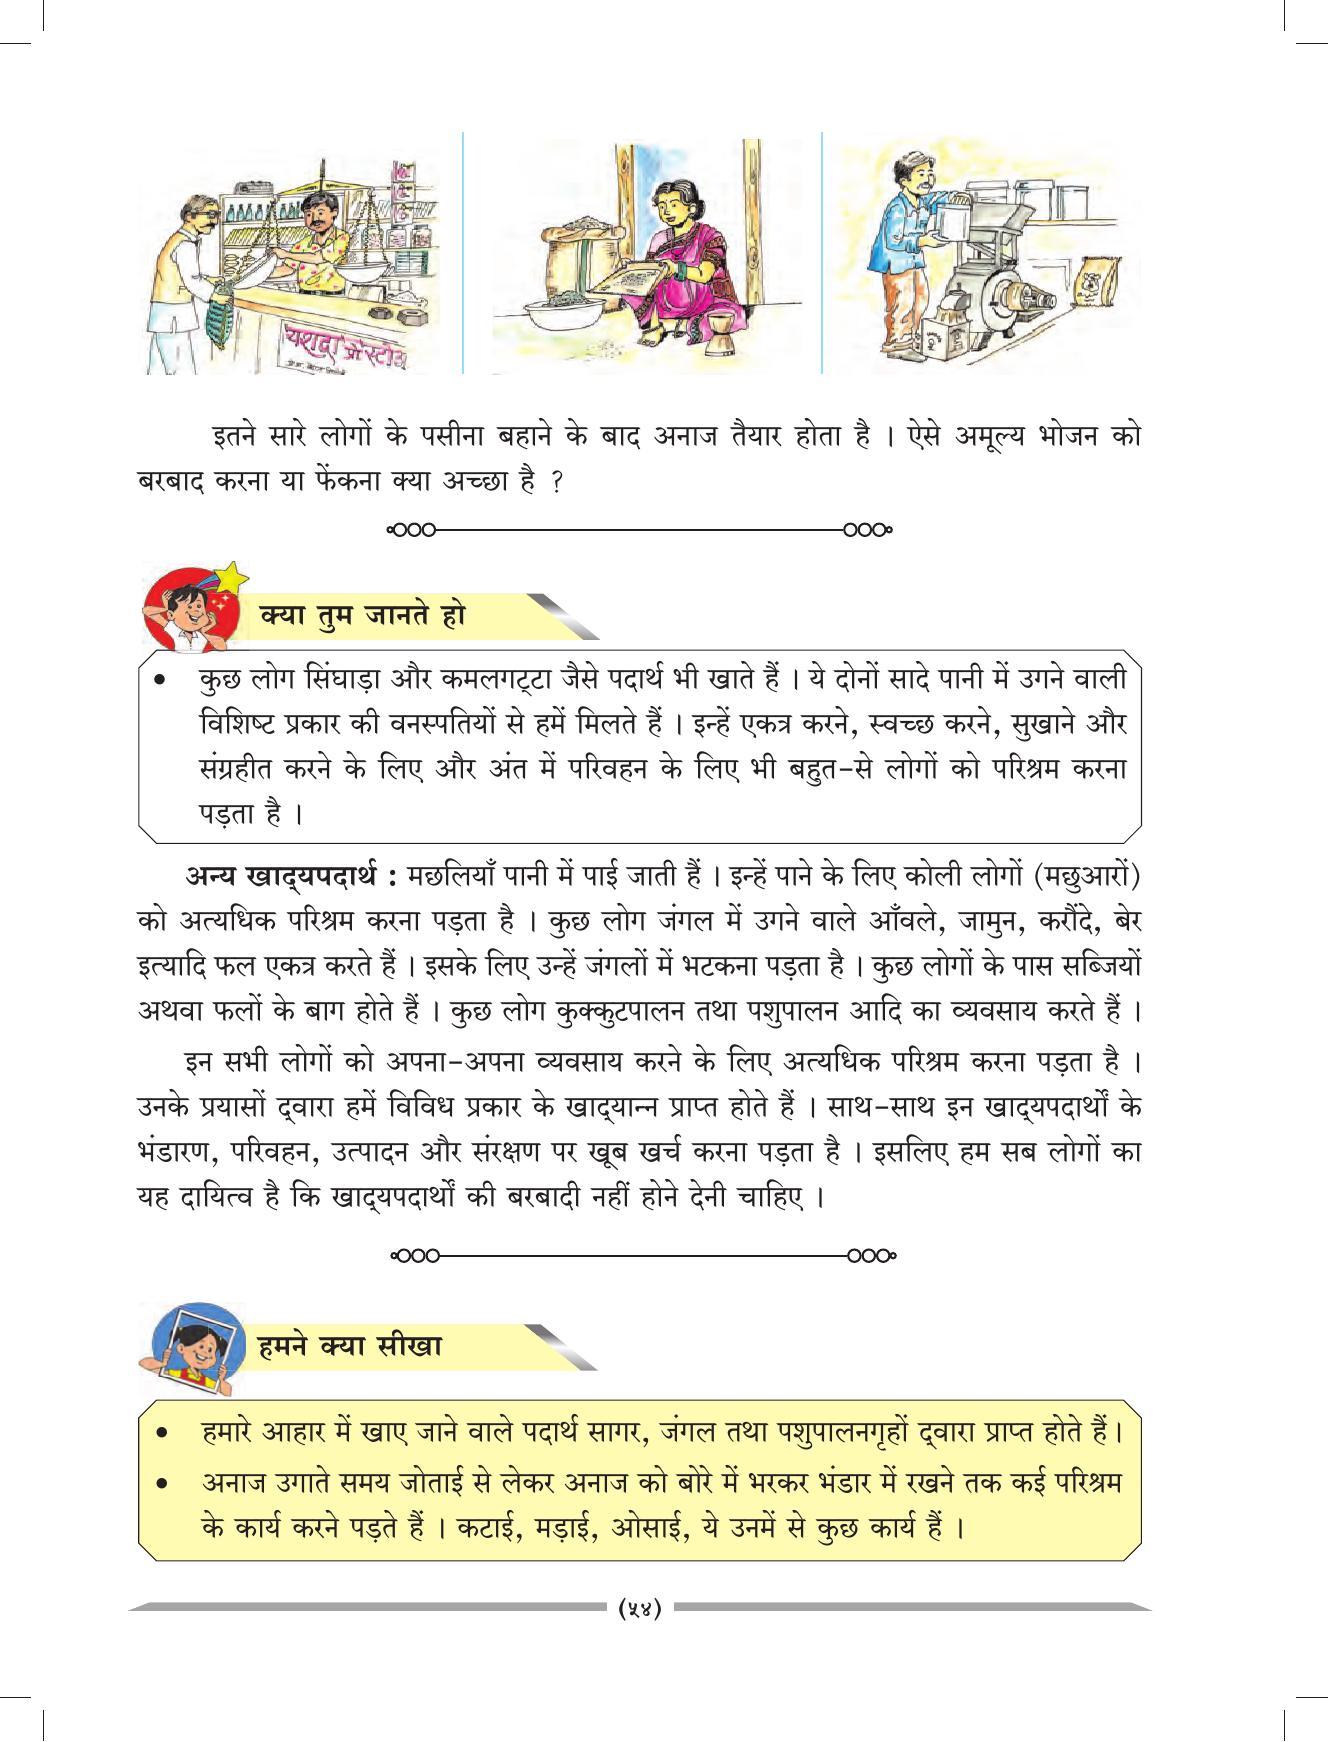 Maharashtra Board Class 4 EVS 1 (Hindi Medium) Textbook - Page 64